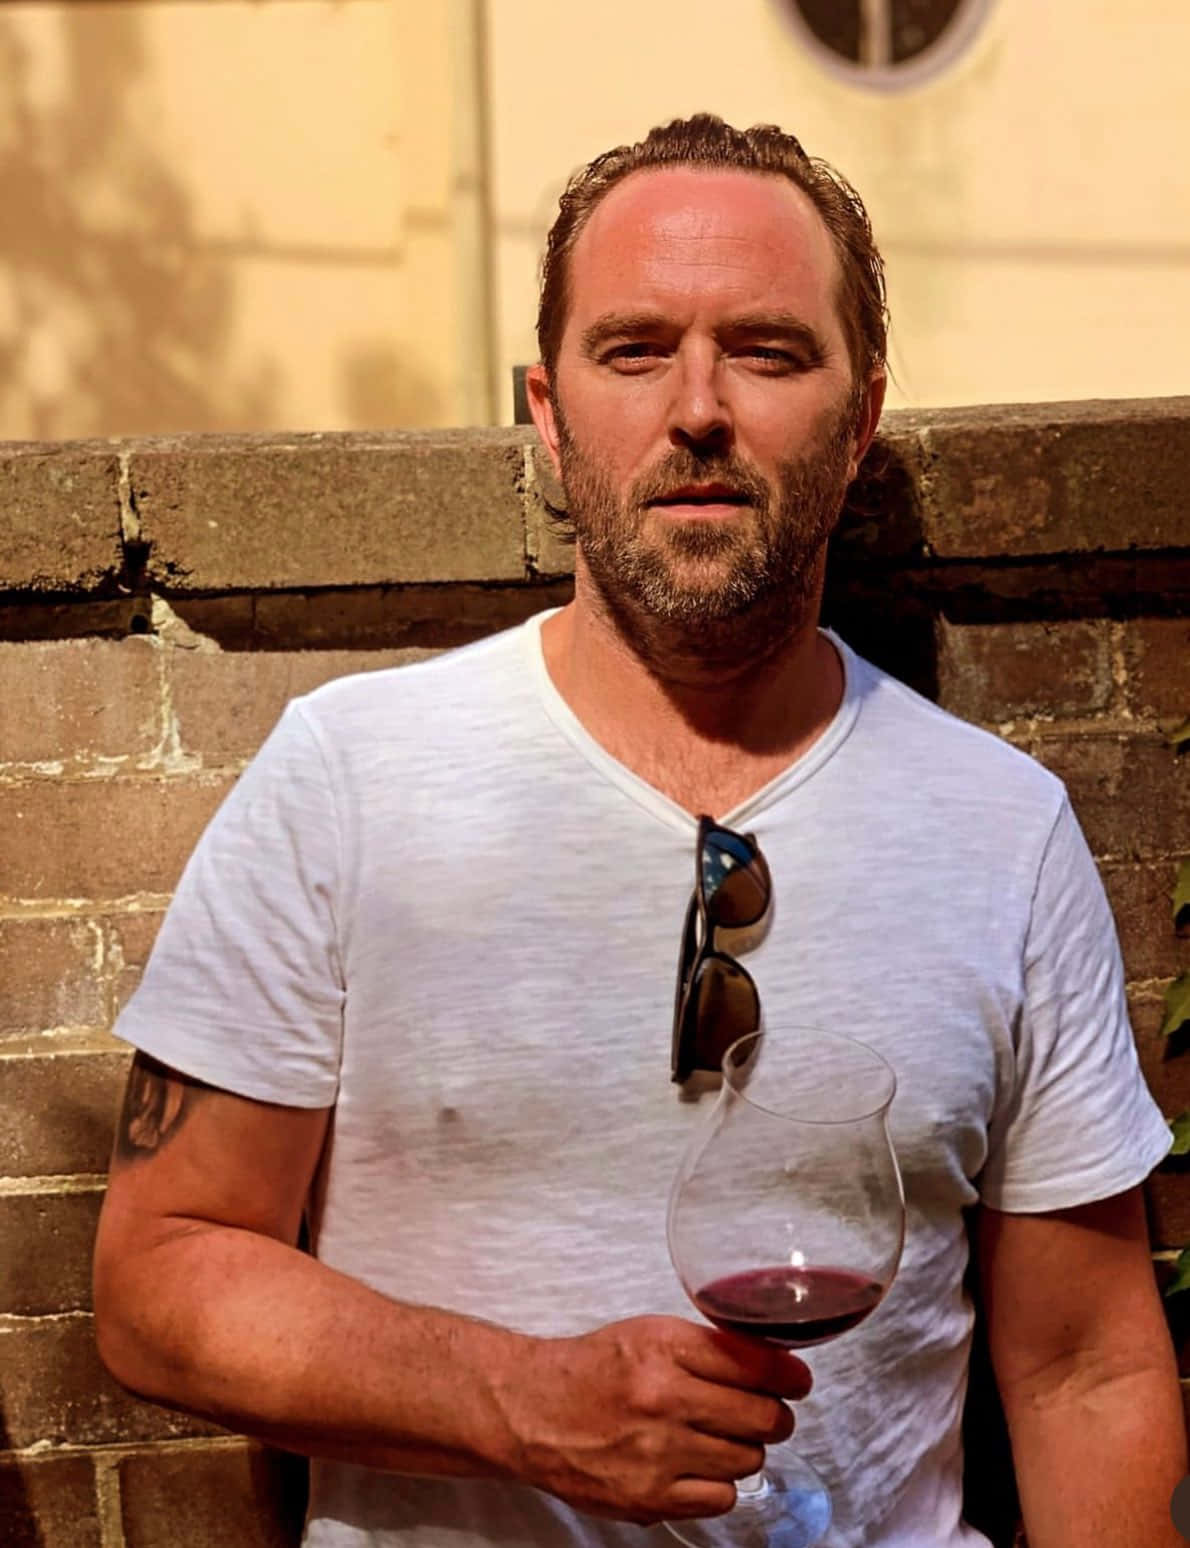 Man Holding Wine Glass Outdoors Wallpaper